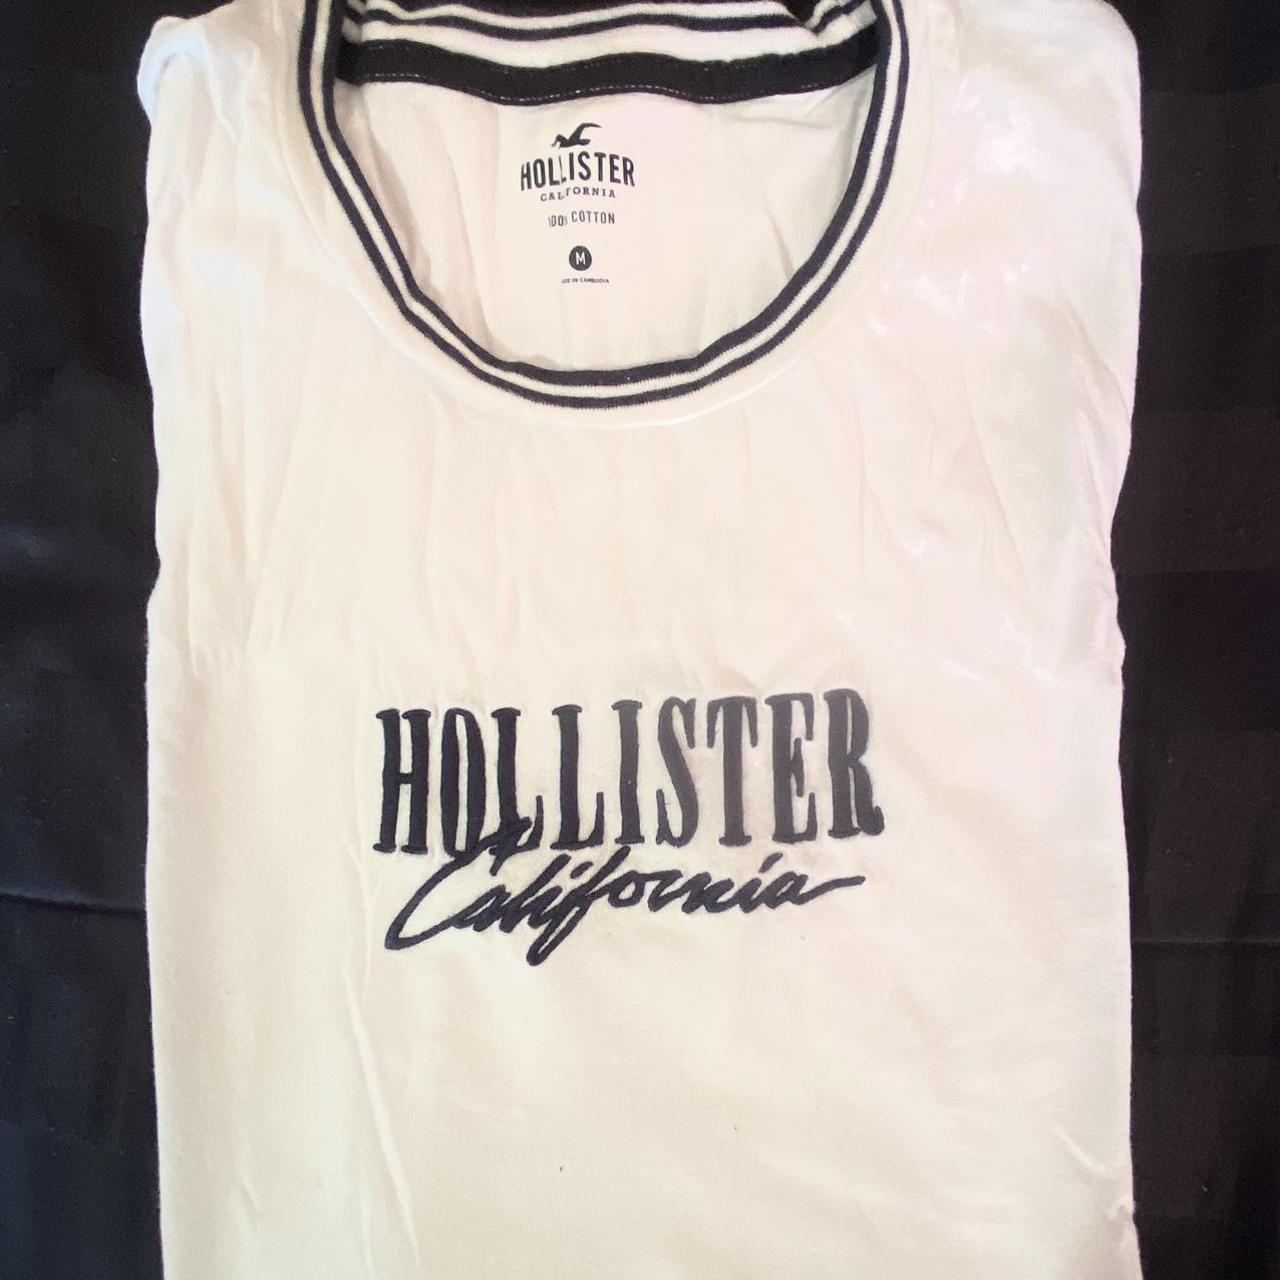 Hollister California Classic Established Men's Cotton T-Shirt